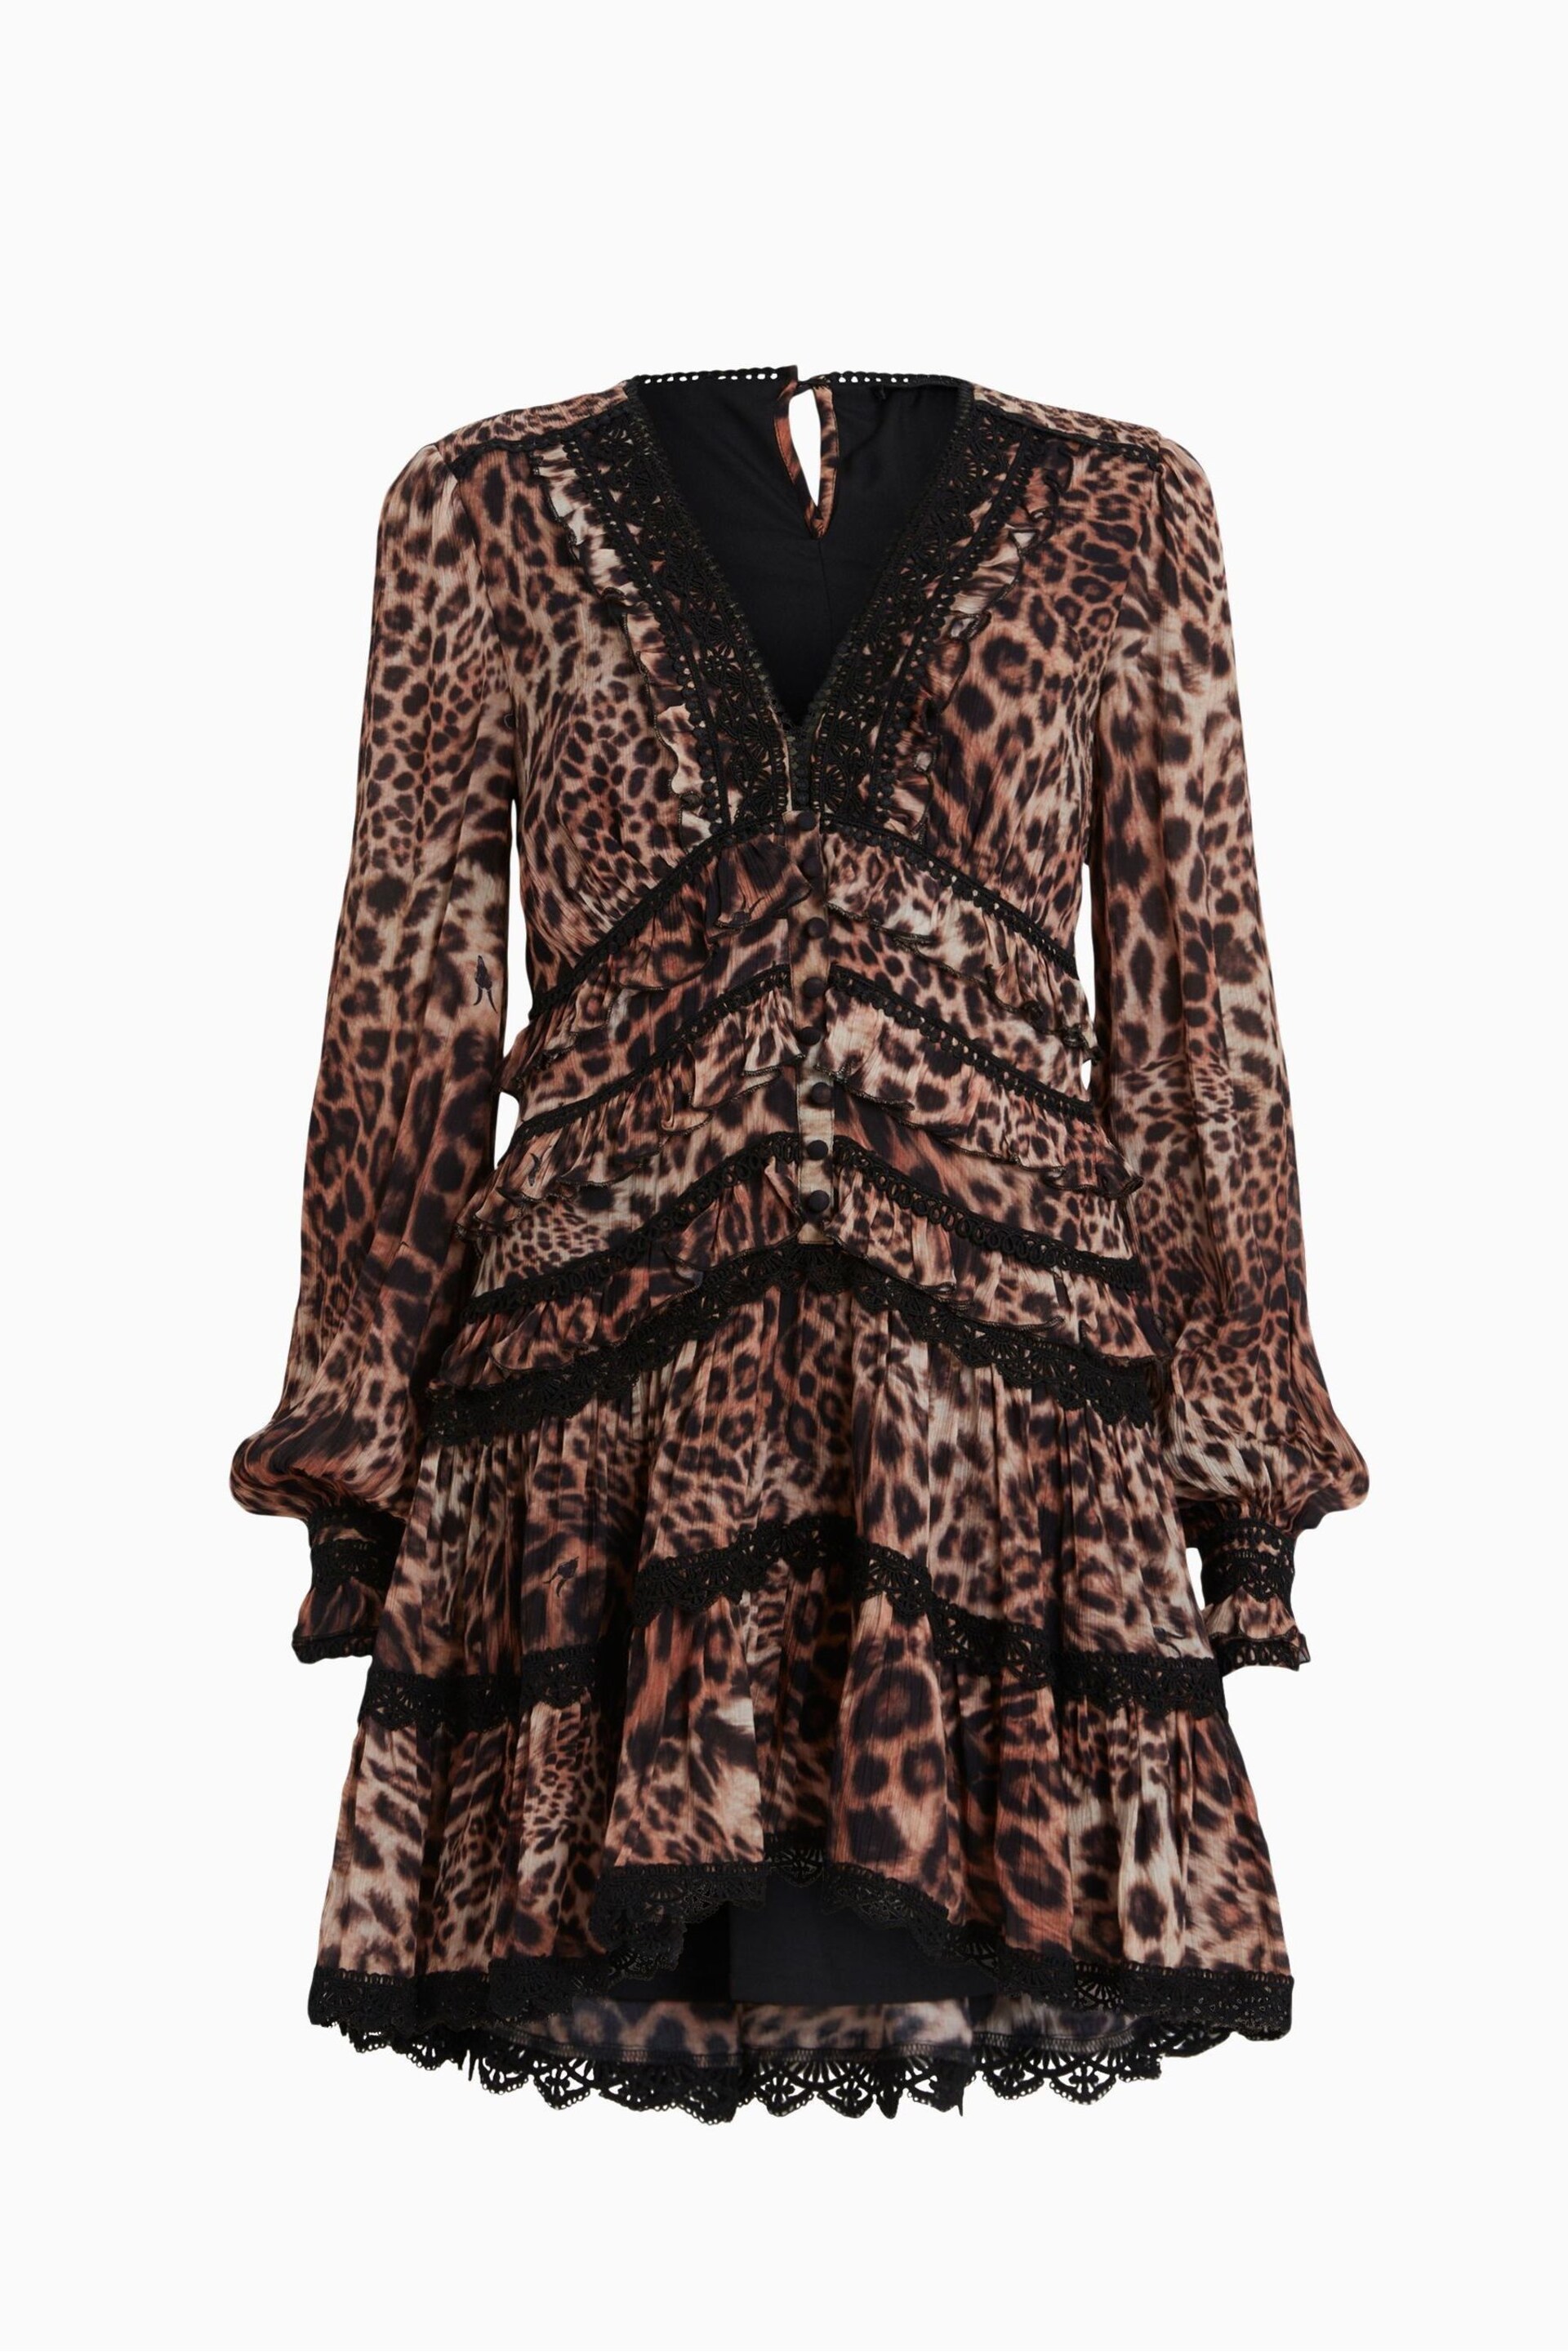 AllSaints Brown Zora Evita Dress - Image 6 of 6